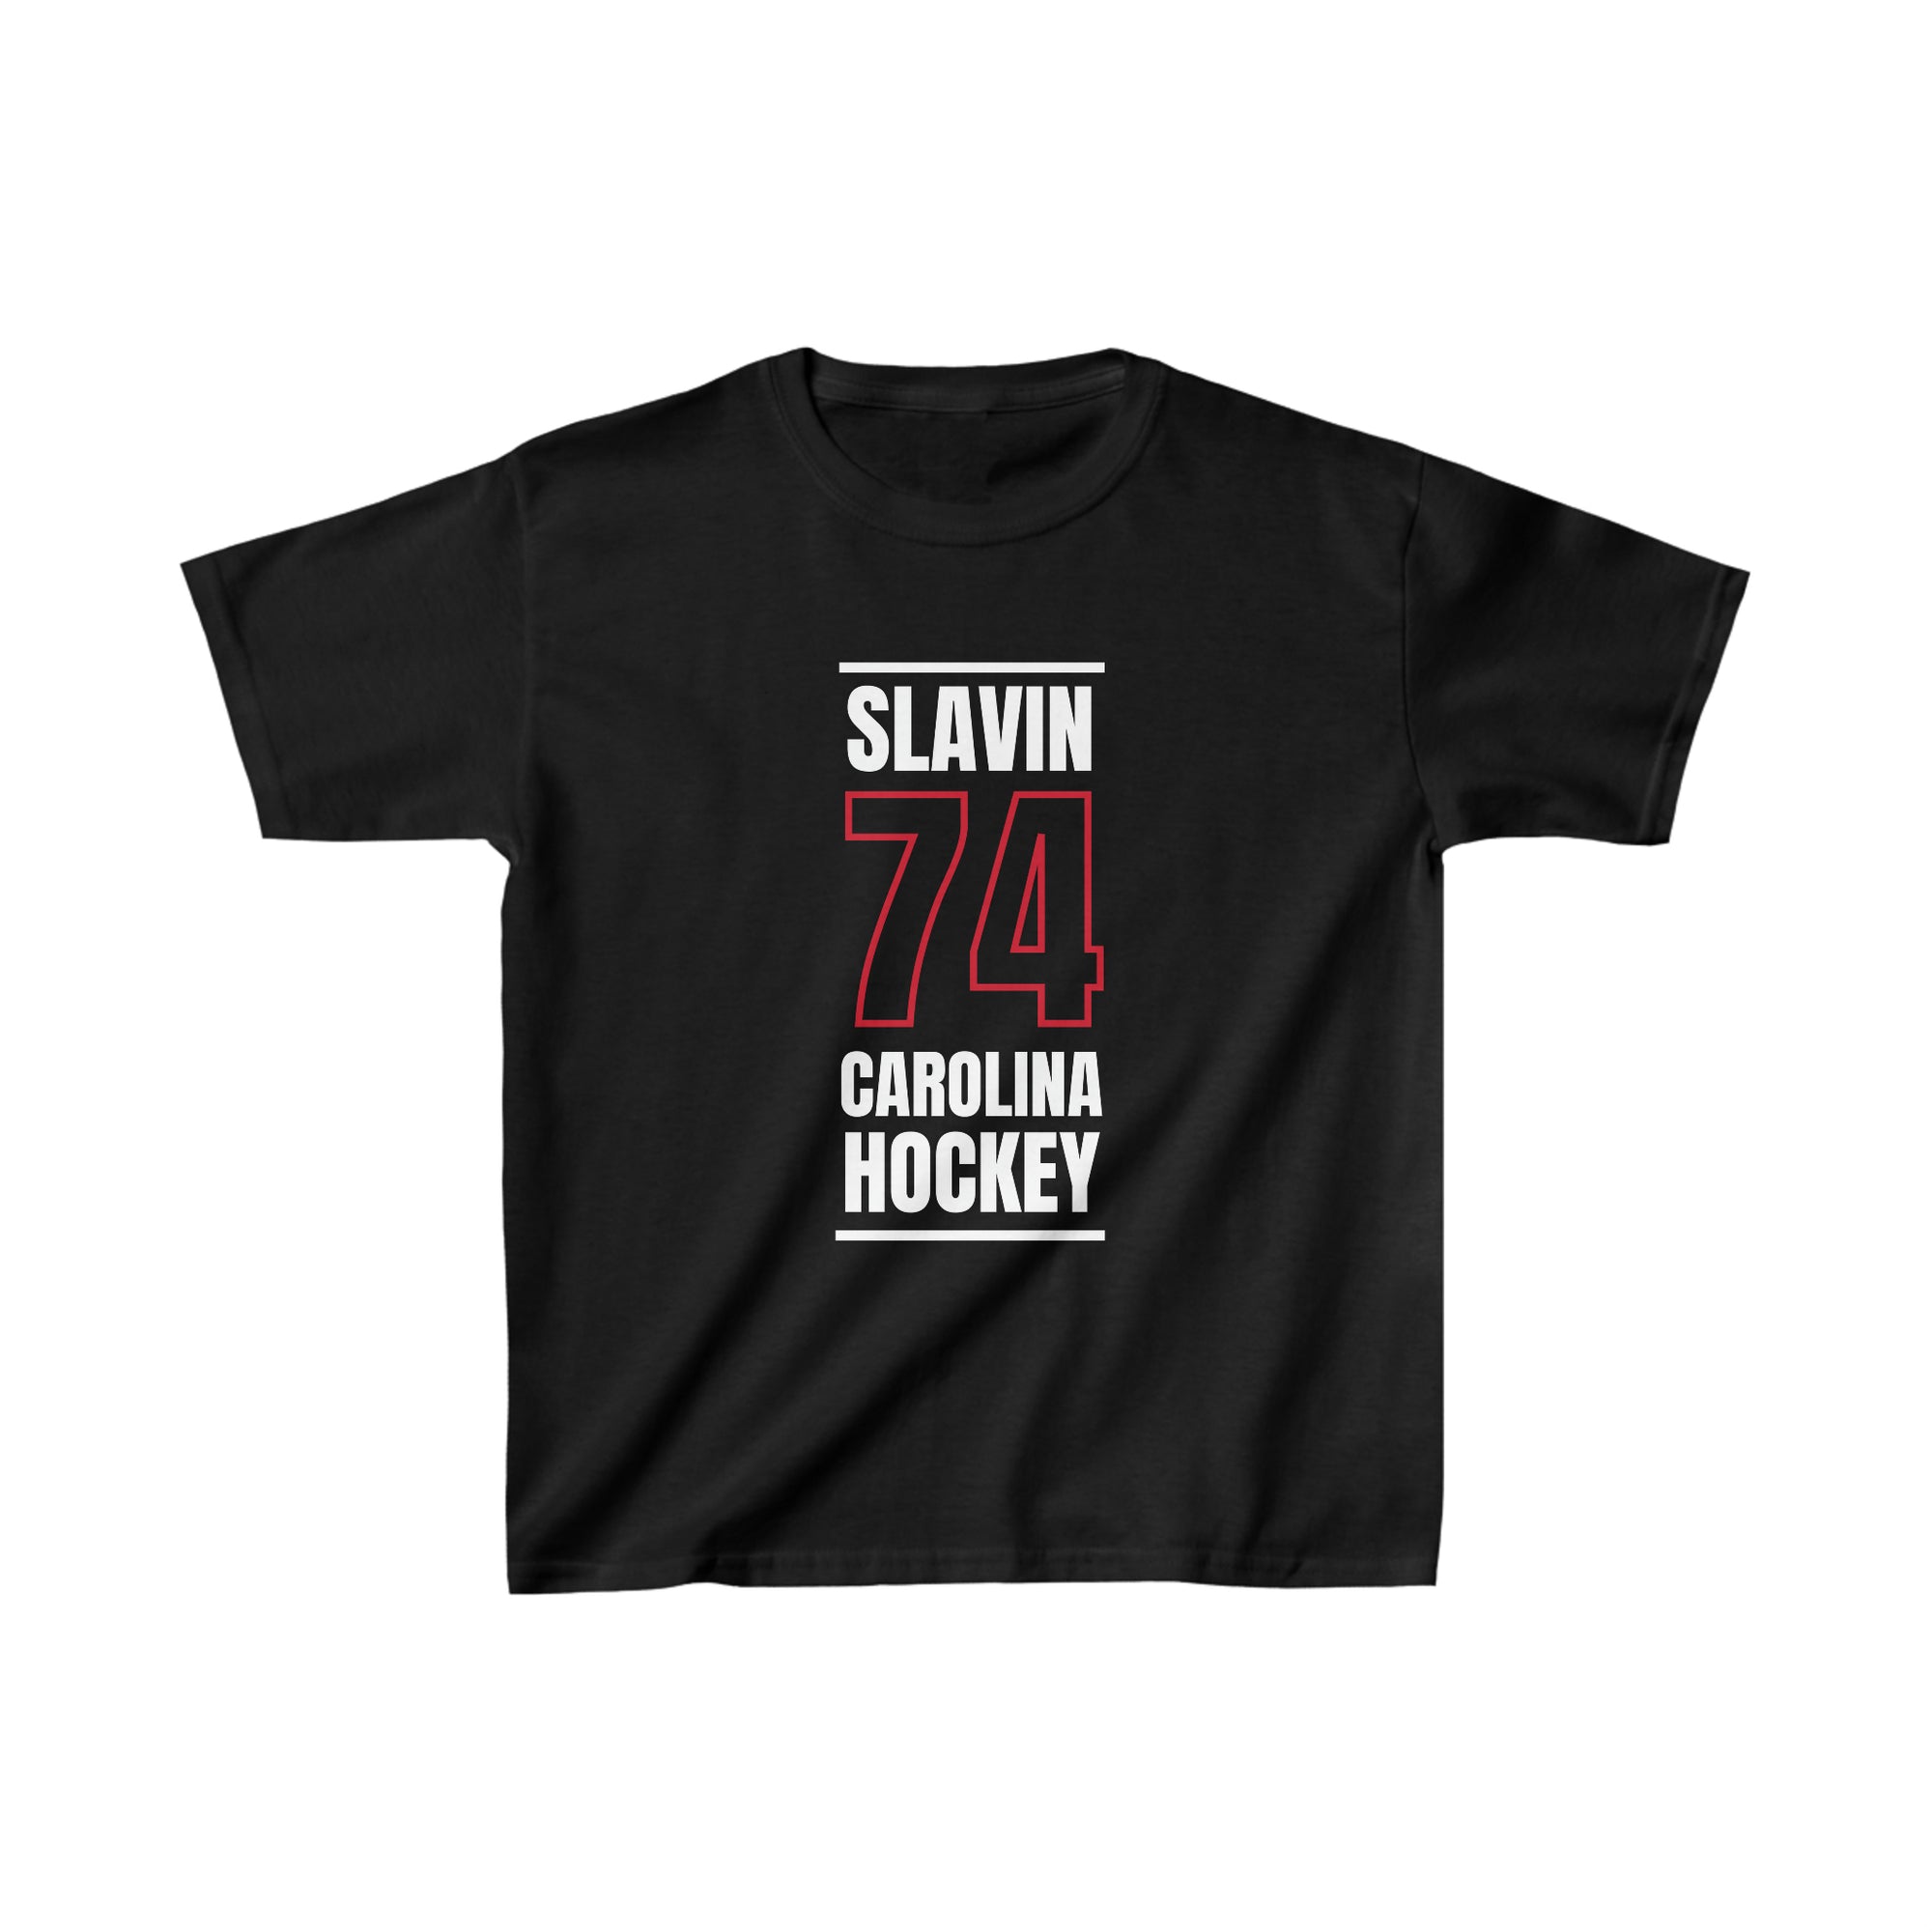 Slavin 74 Carolina Hockey Black Vertical Design Kids Tee